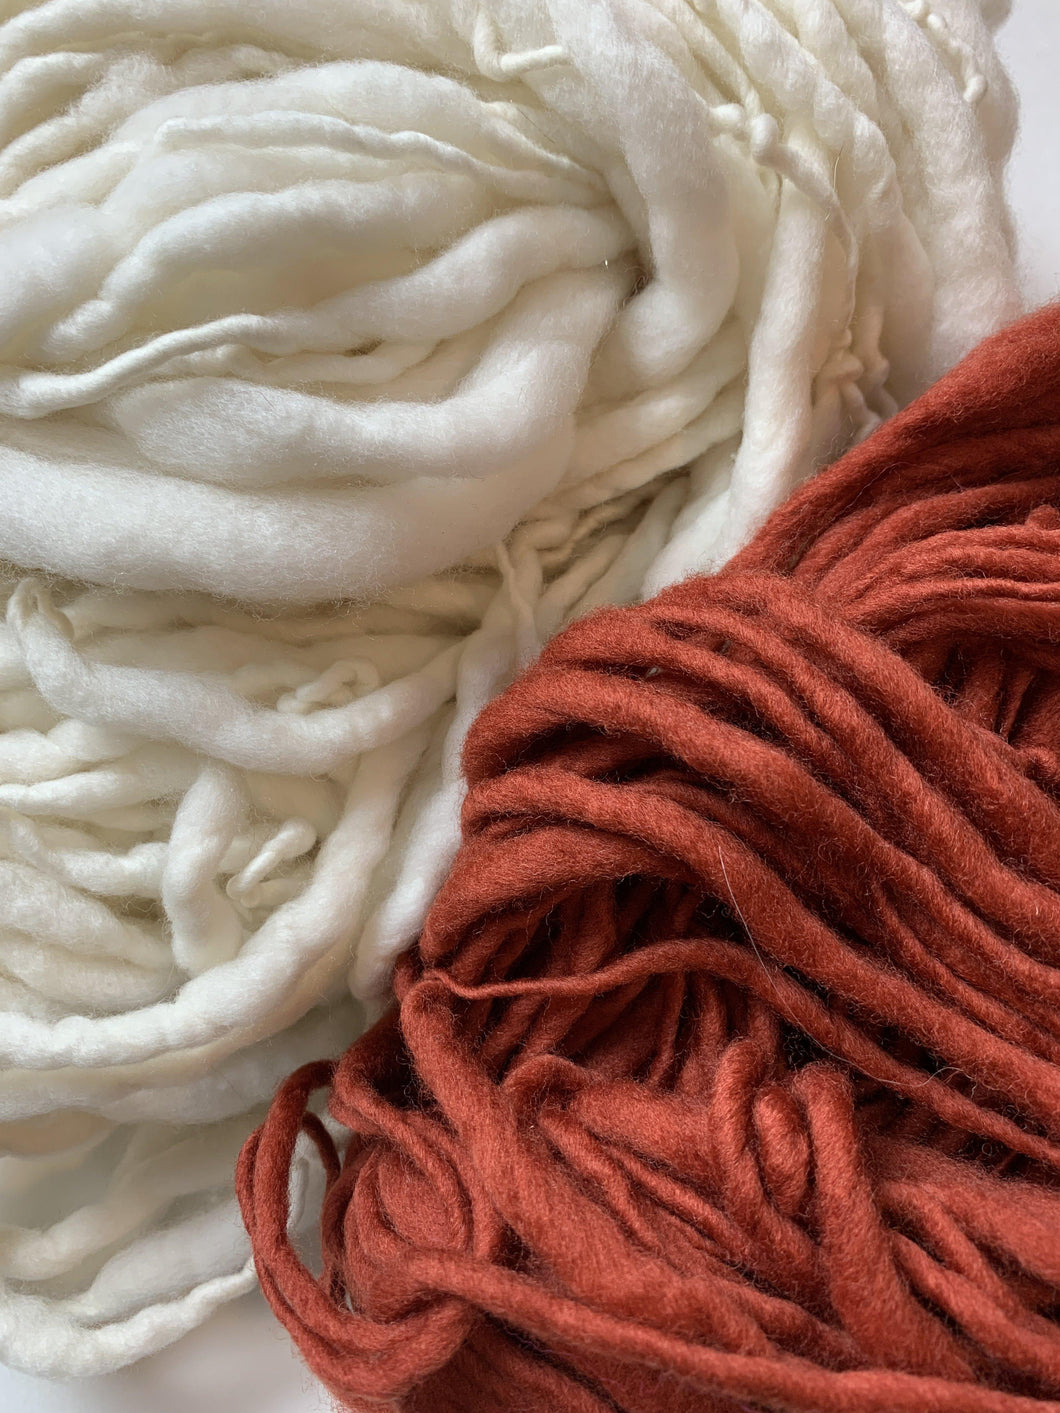 Basic, Beautiful Tapestry Weaving: Beginner Weaving - January 23rd (in-person) - Ply Studio 